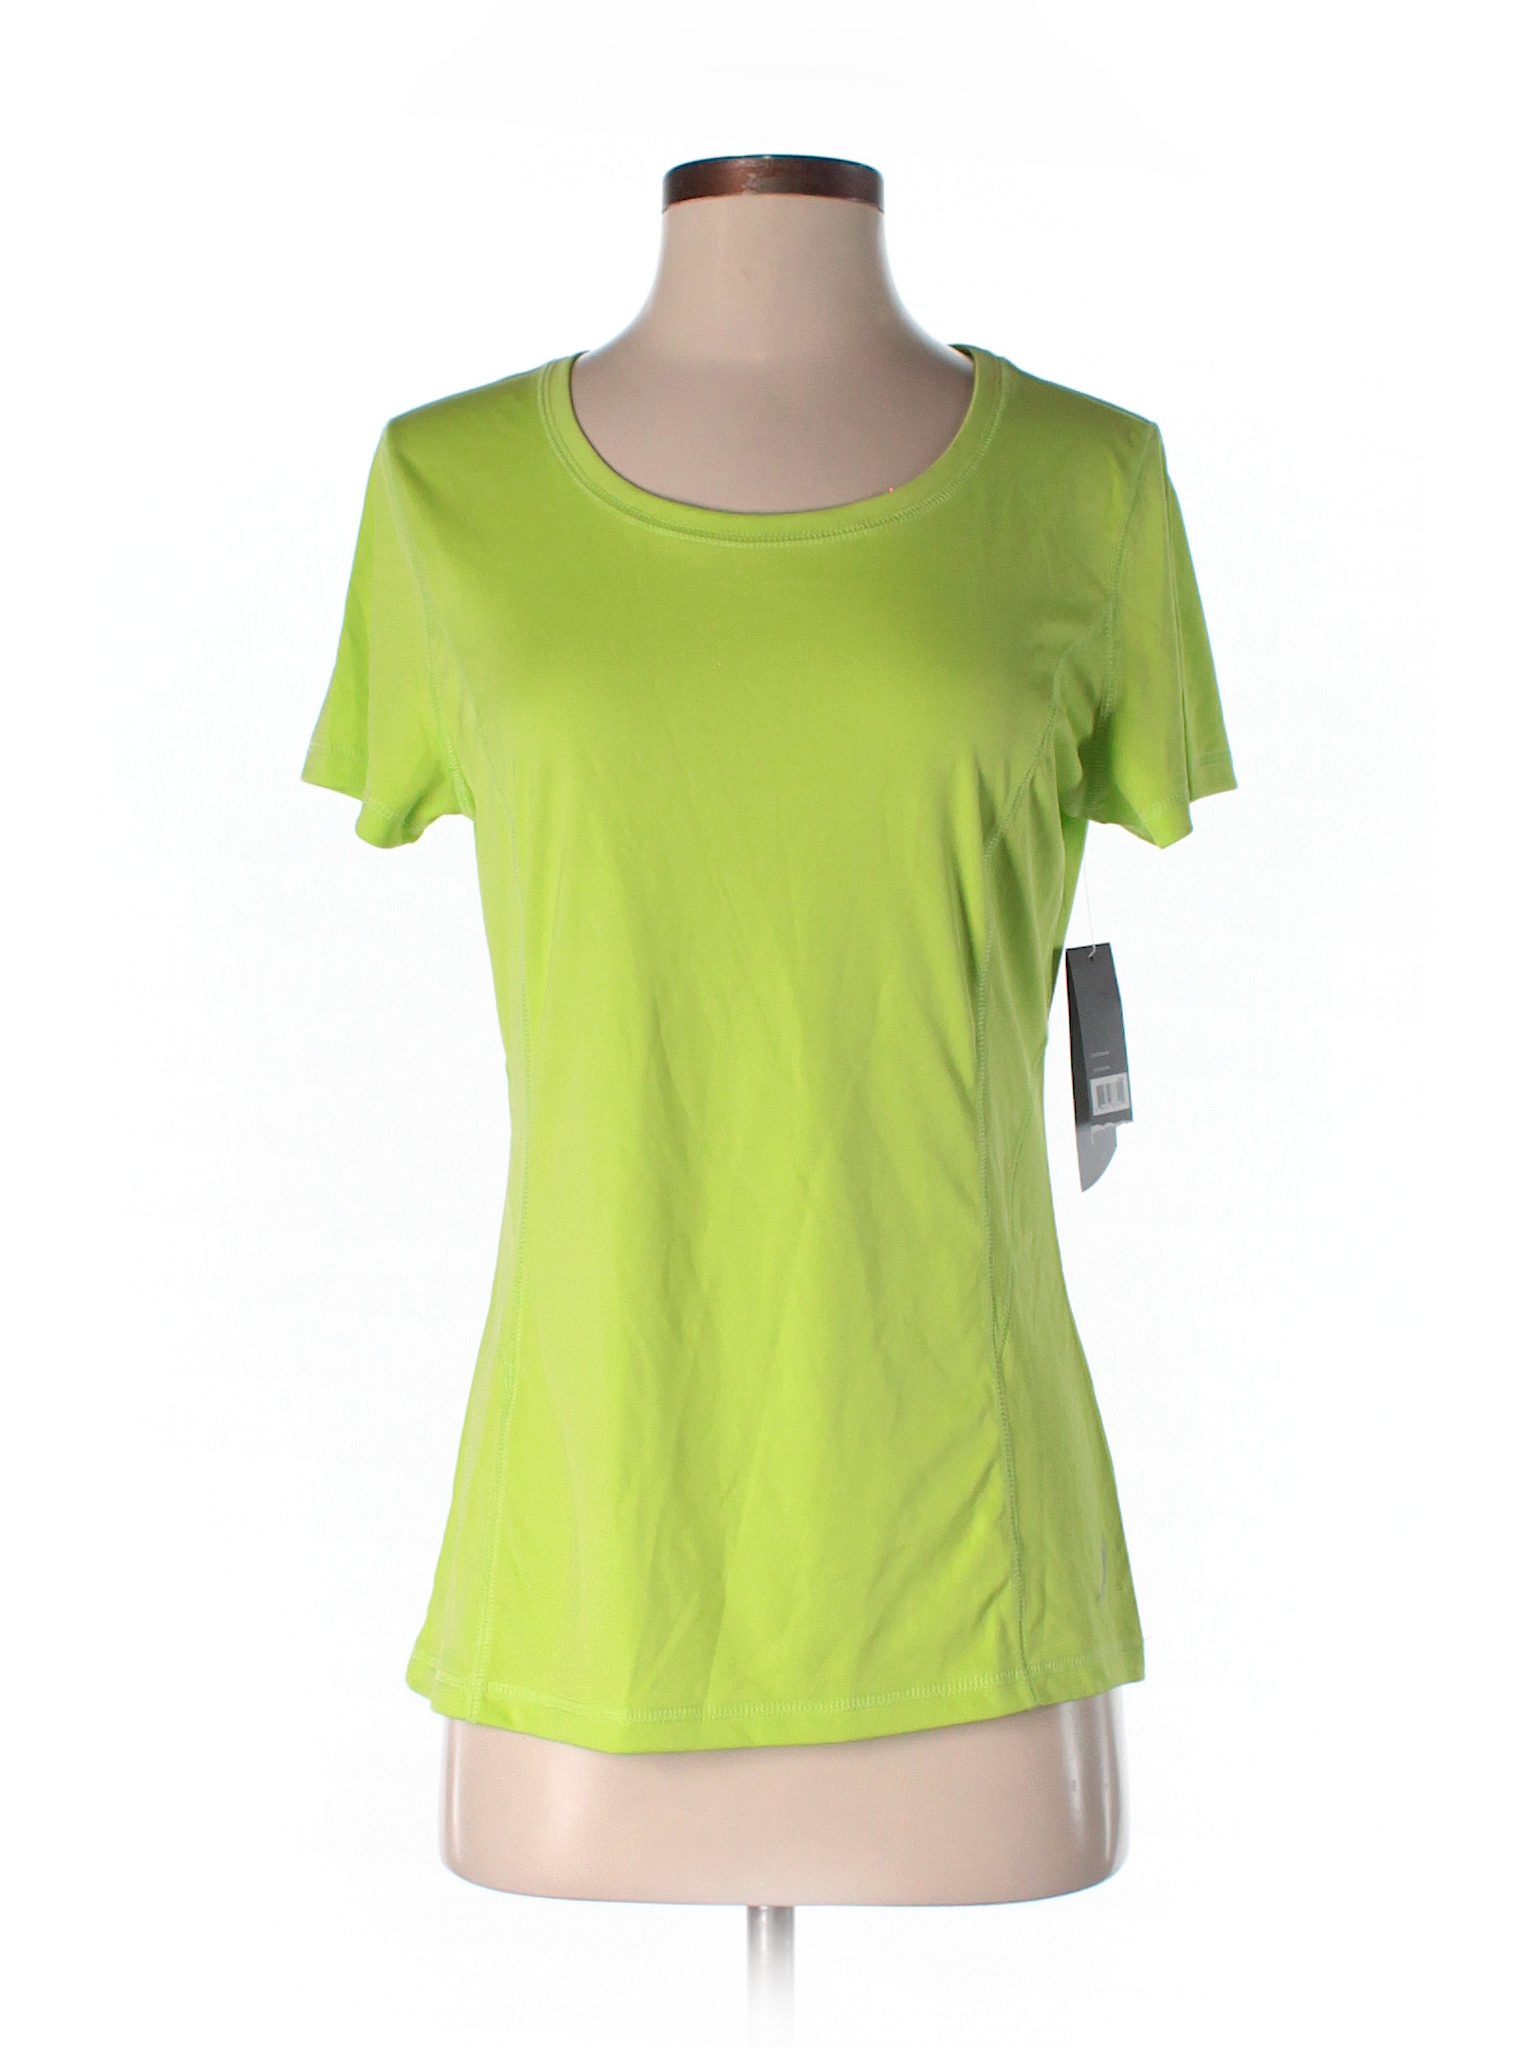 Exertek 100% Polyester Solid Light Green Active T-Shirt Size S - 85% ...